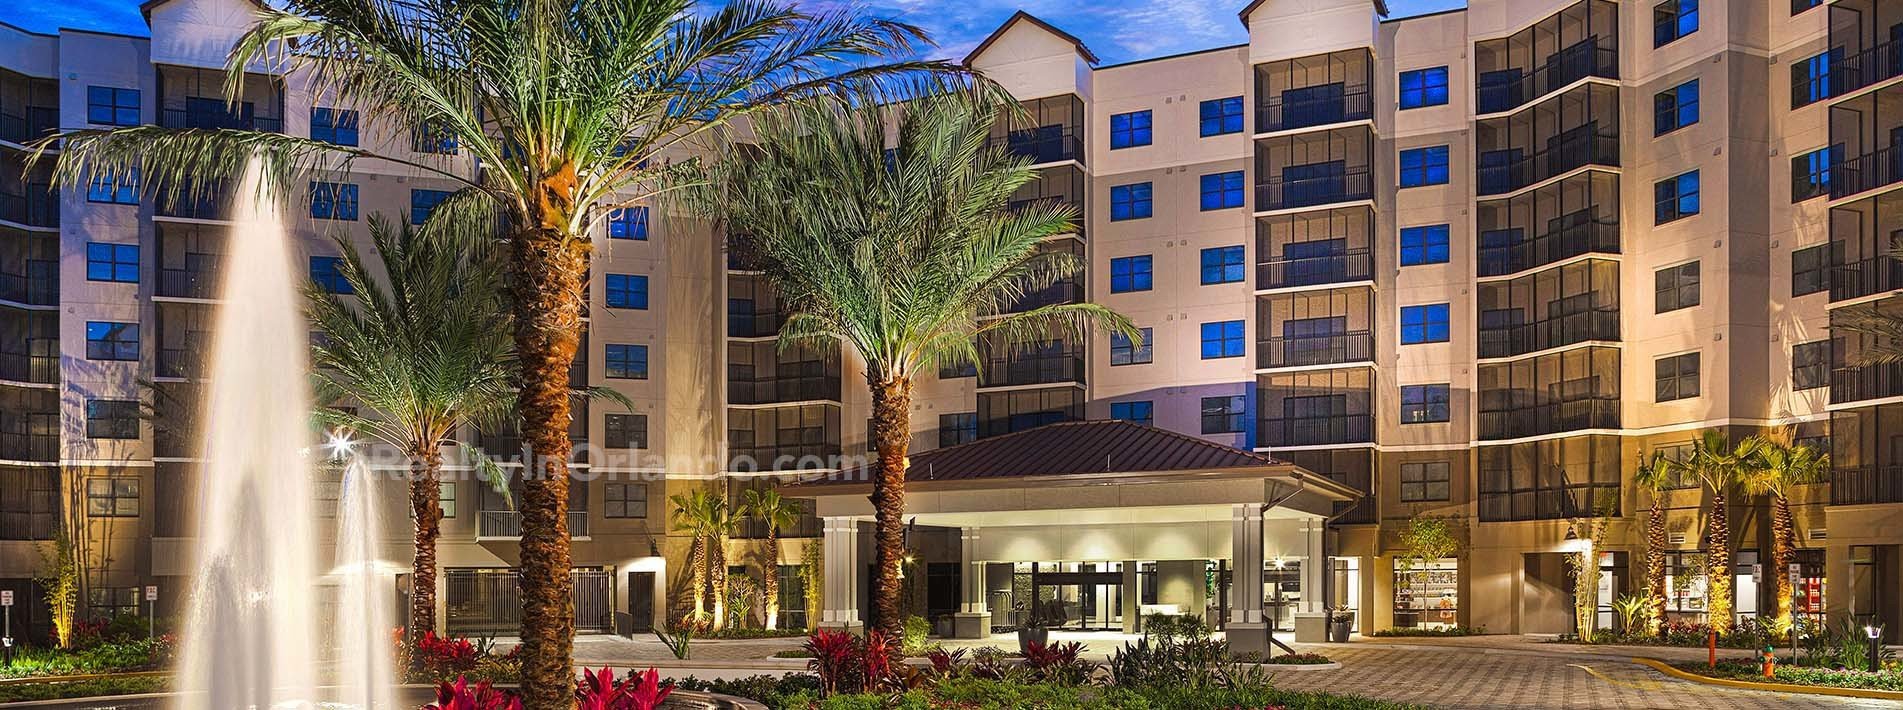 The Grove Resort Orlando Florida Real Estate